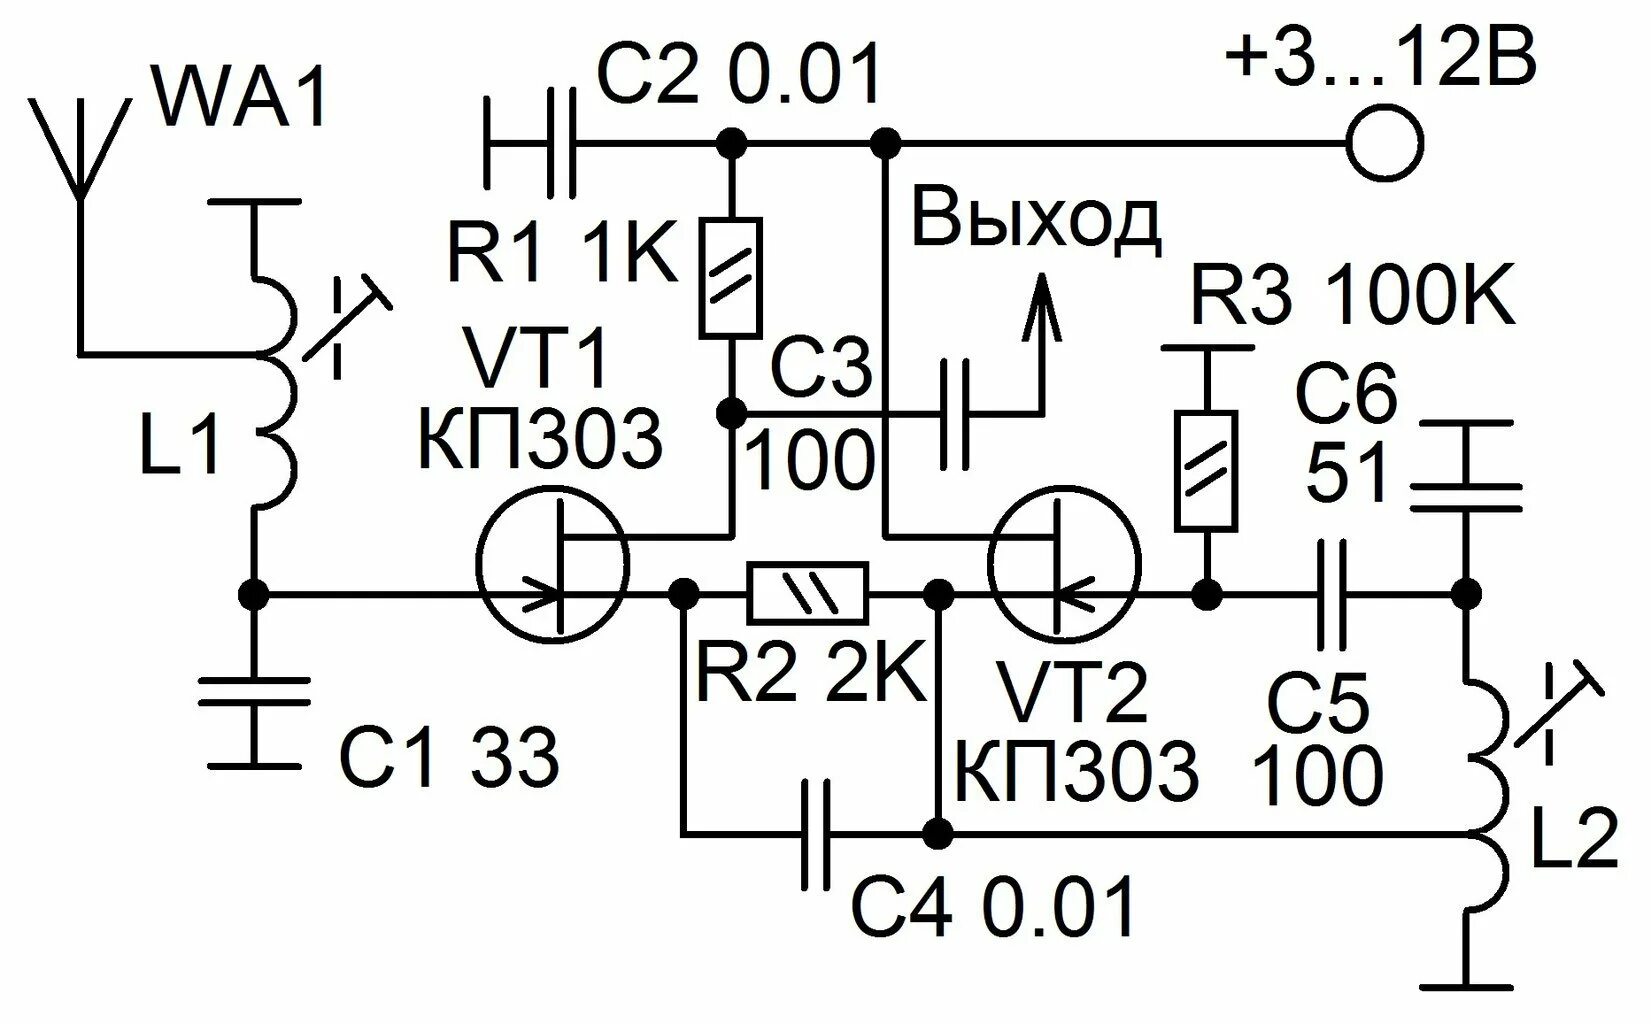 Схема УКВ 88-108мгц приемника на транзисторах. Fm радиоприемник на транзисторах 88 108 МГЦ. Схема приемника прямого усиления на 27 МГЦ. Схема конвертера УКВ fm на транзисторах. Конвертер укв в фм